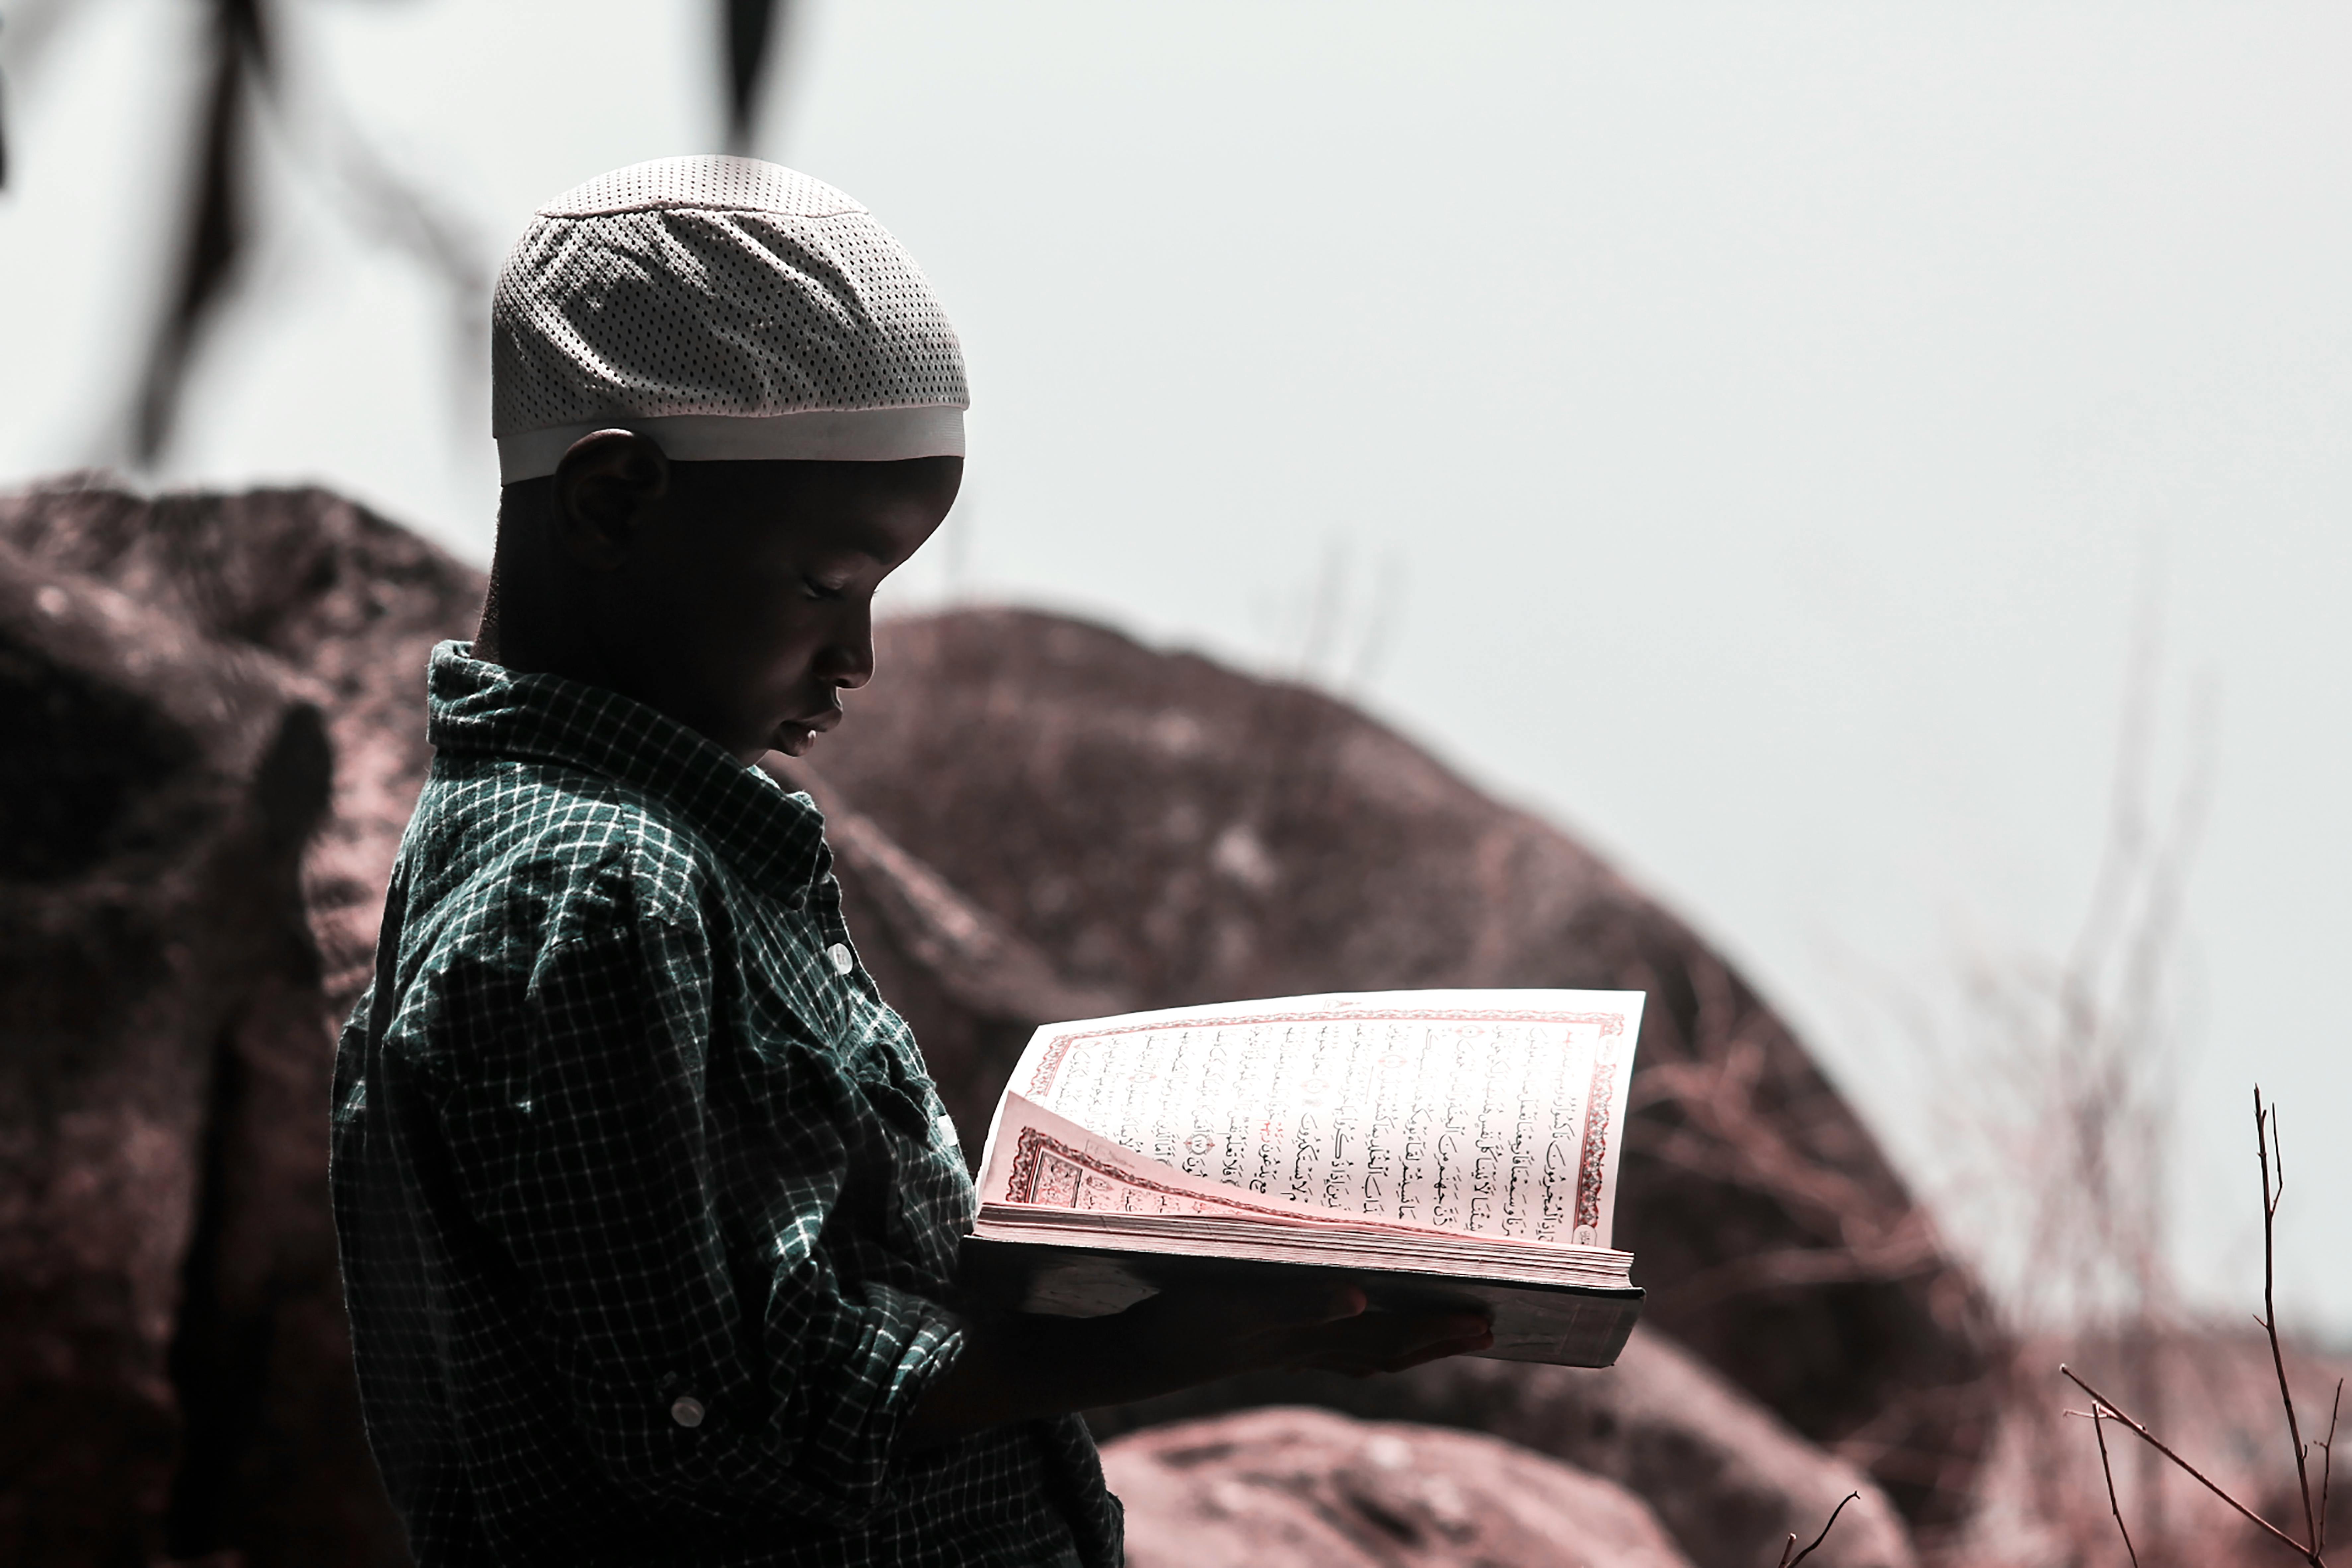 A little Muslim boy reading the Quran